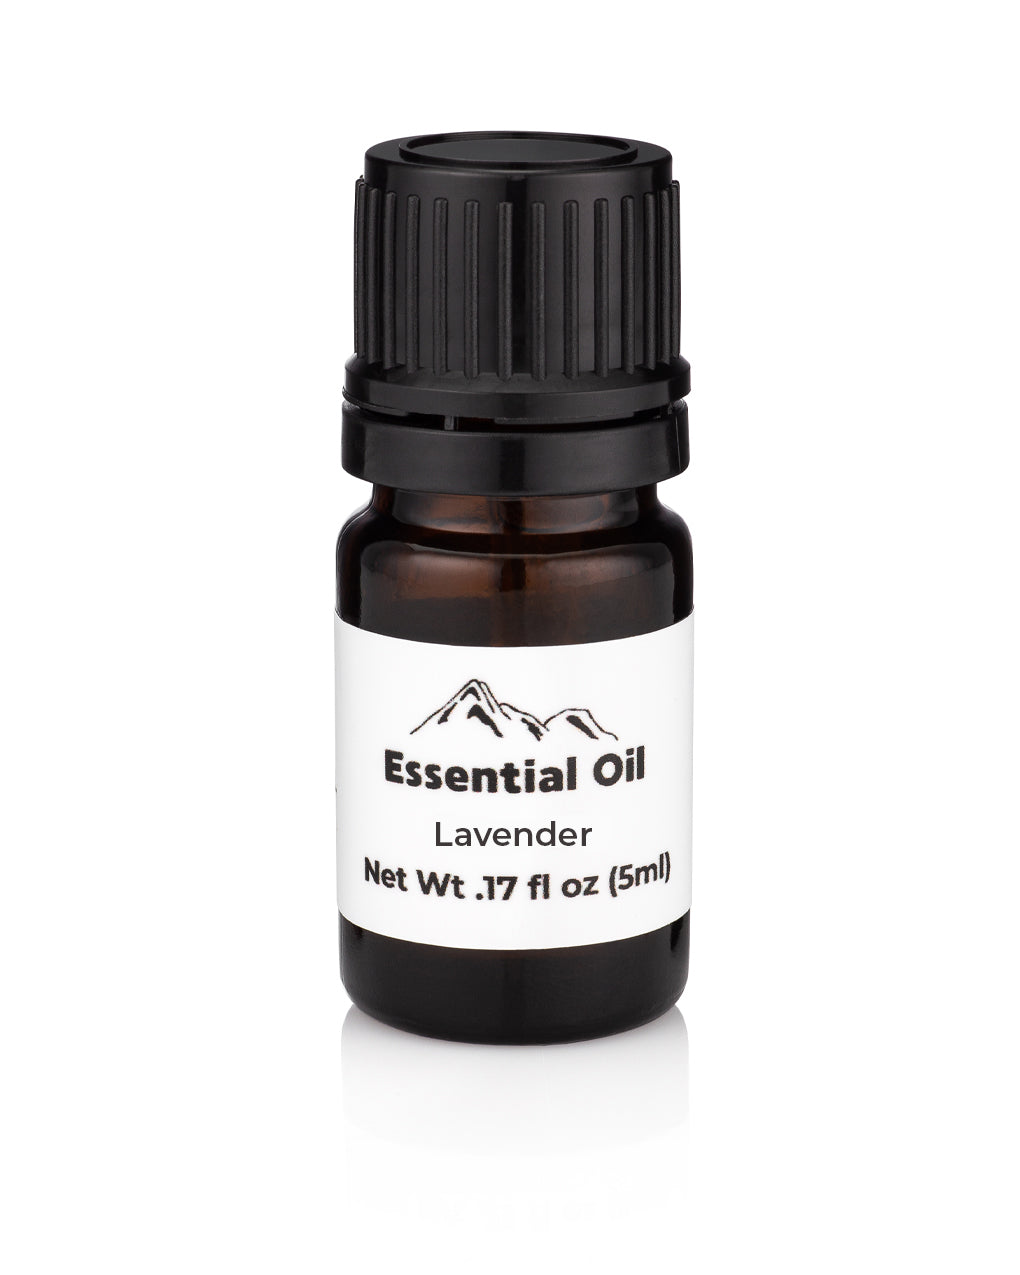 Lavender Grosso Essential Oil